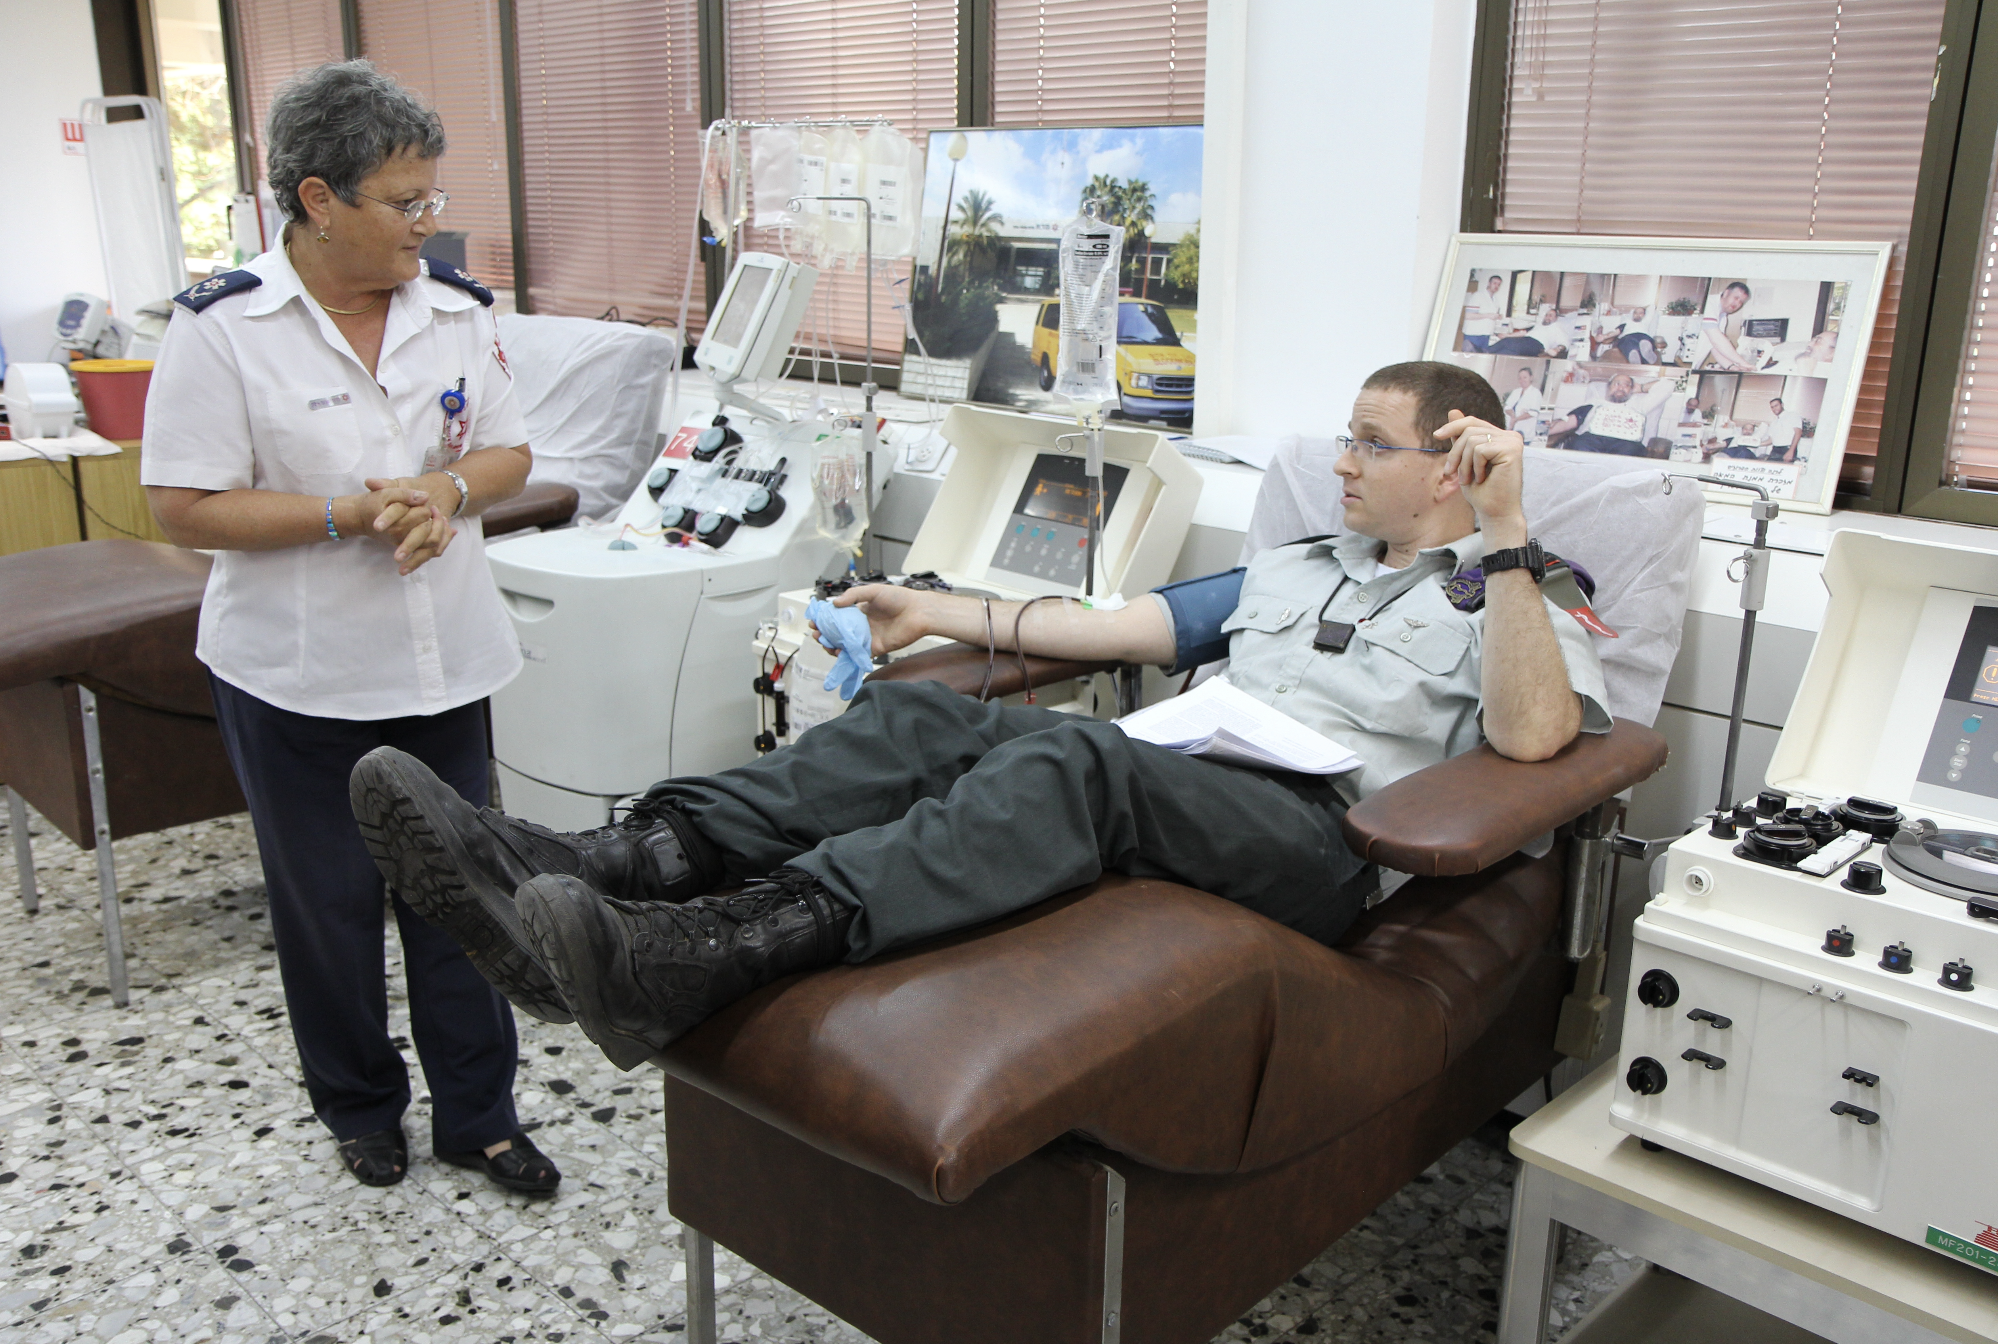 donating blood plasma